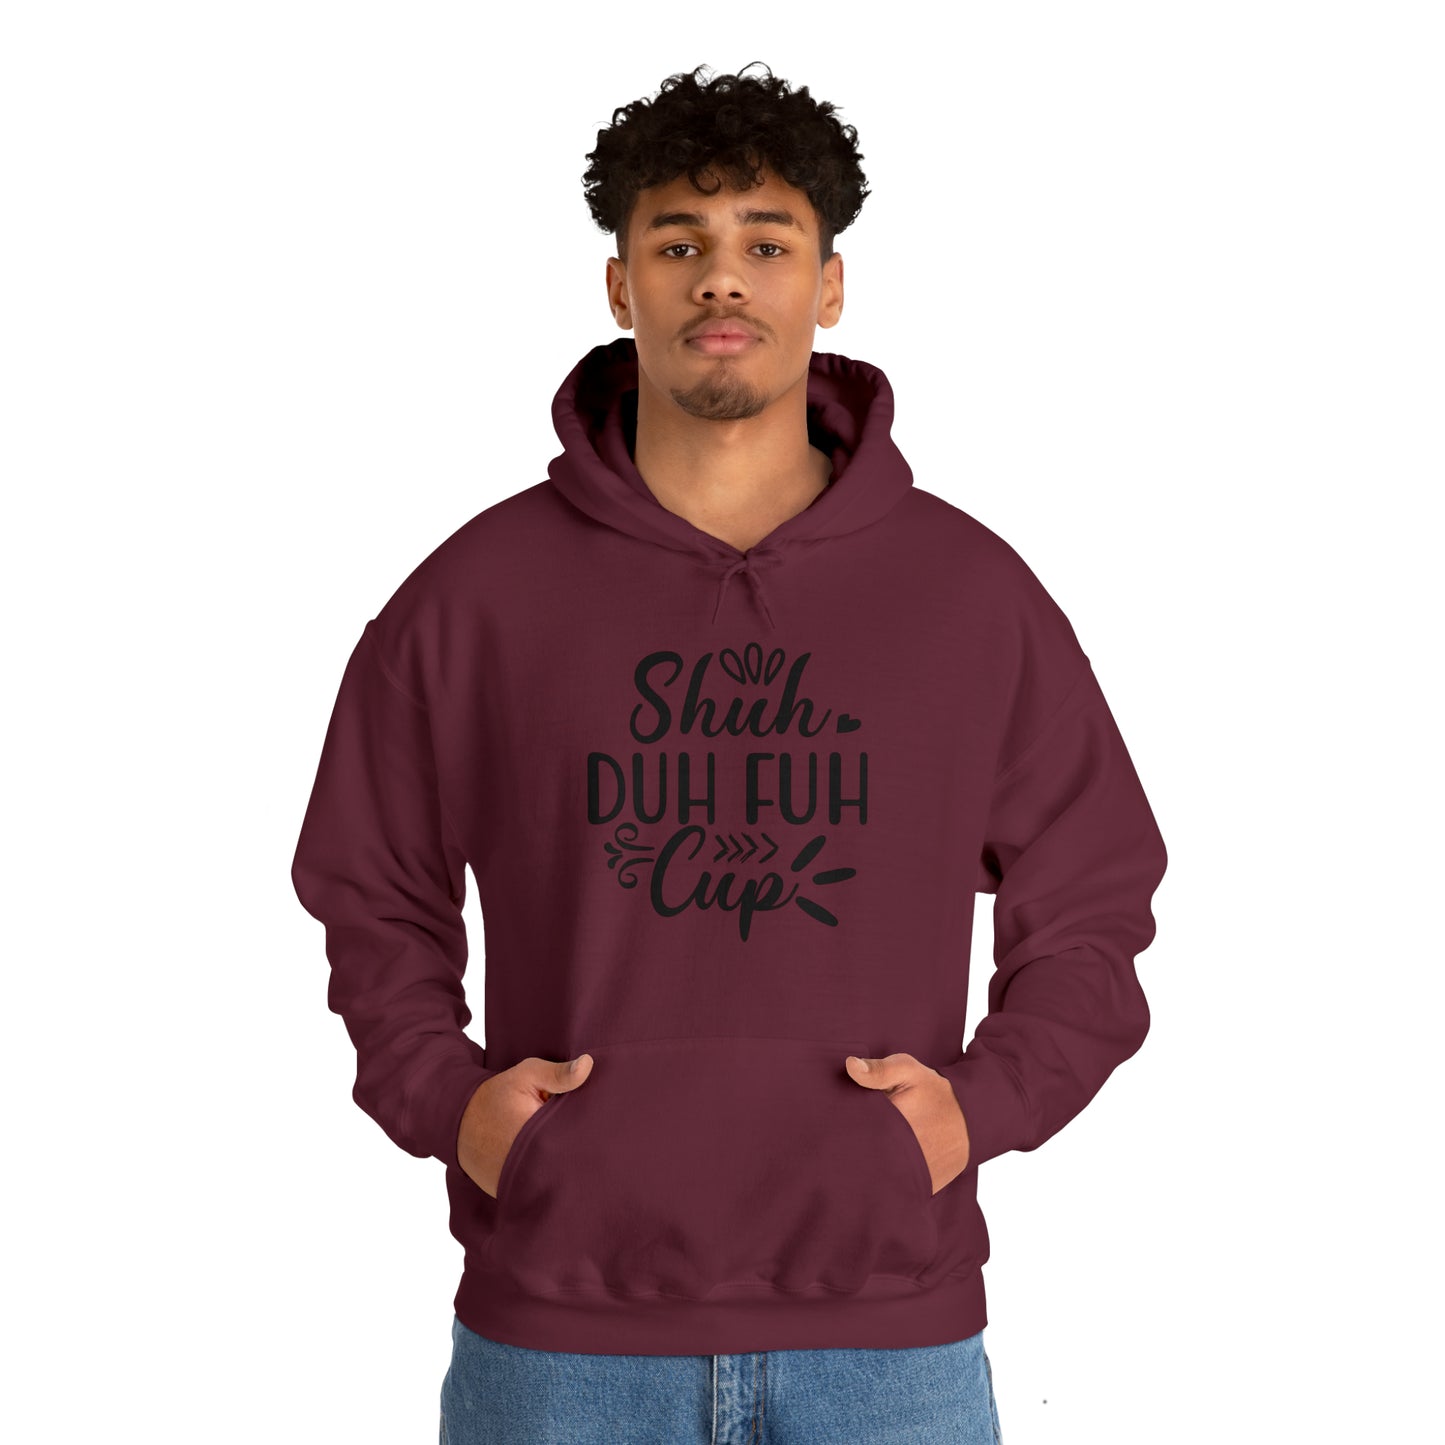 Shuh Duh Fuh Cup | Hooded Sweatshirt